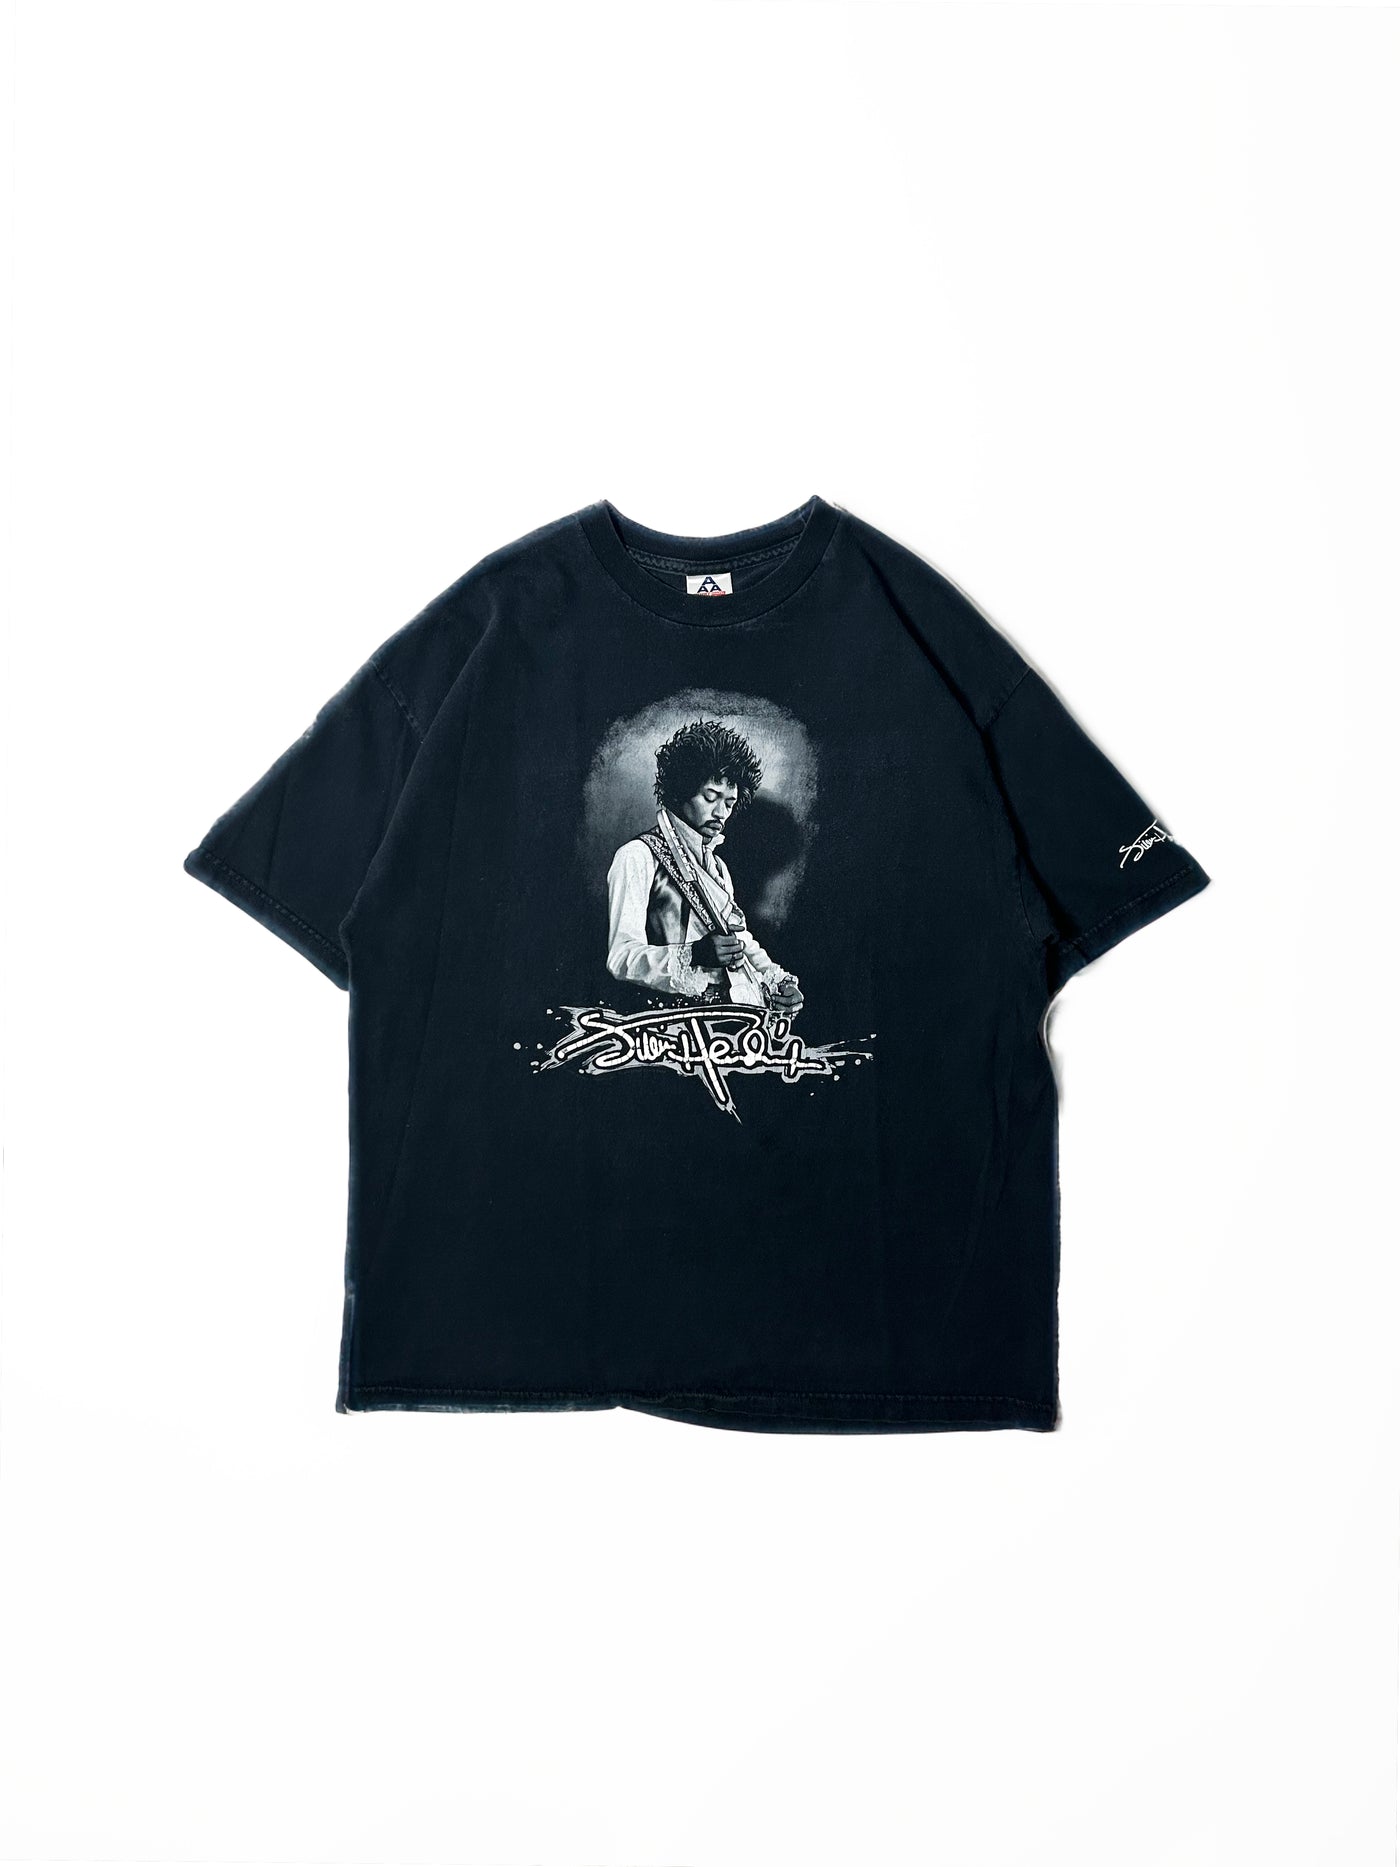 2004 Jimmy Hendrix T-Shirt